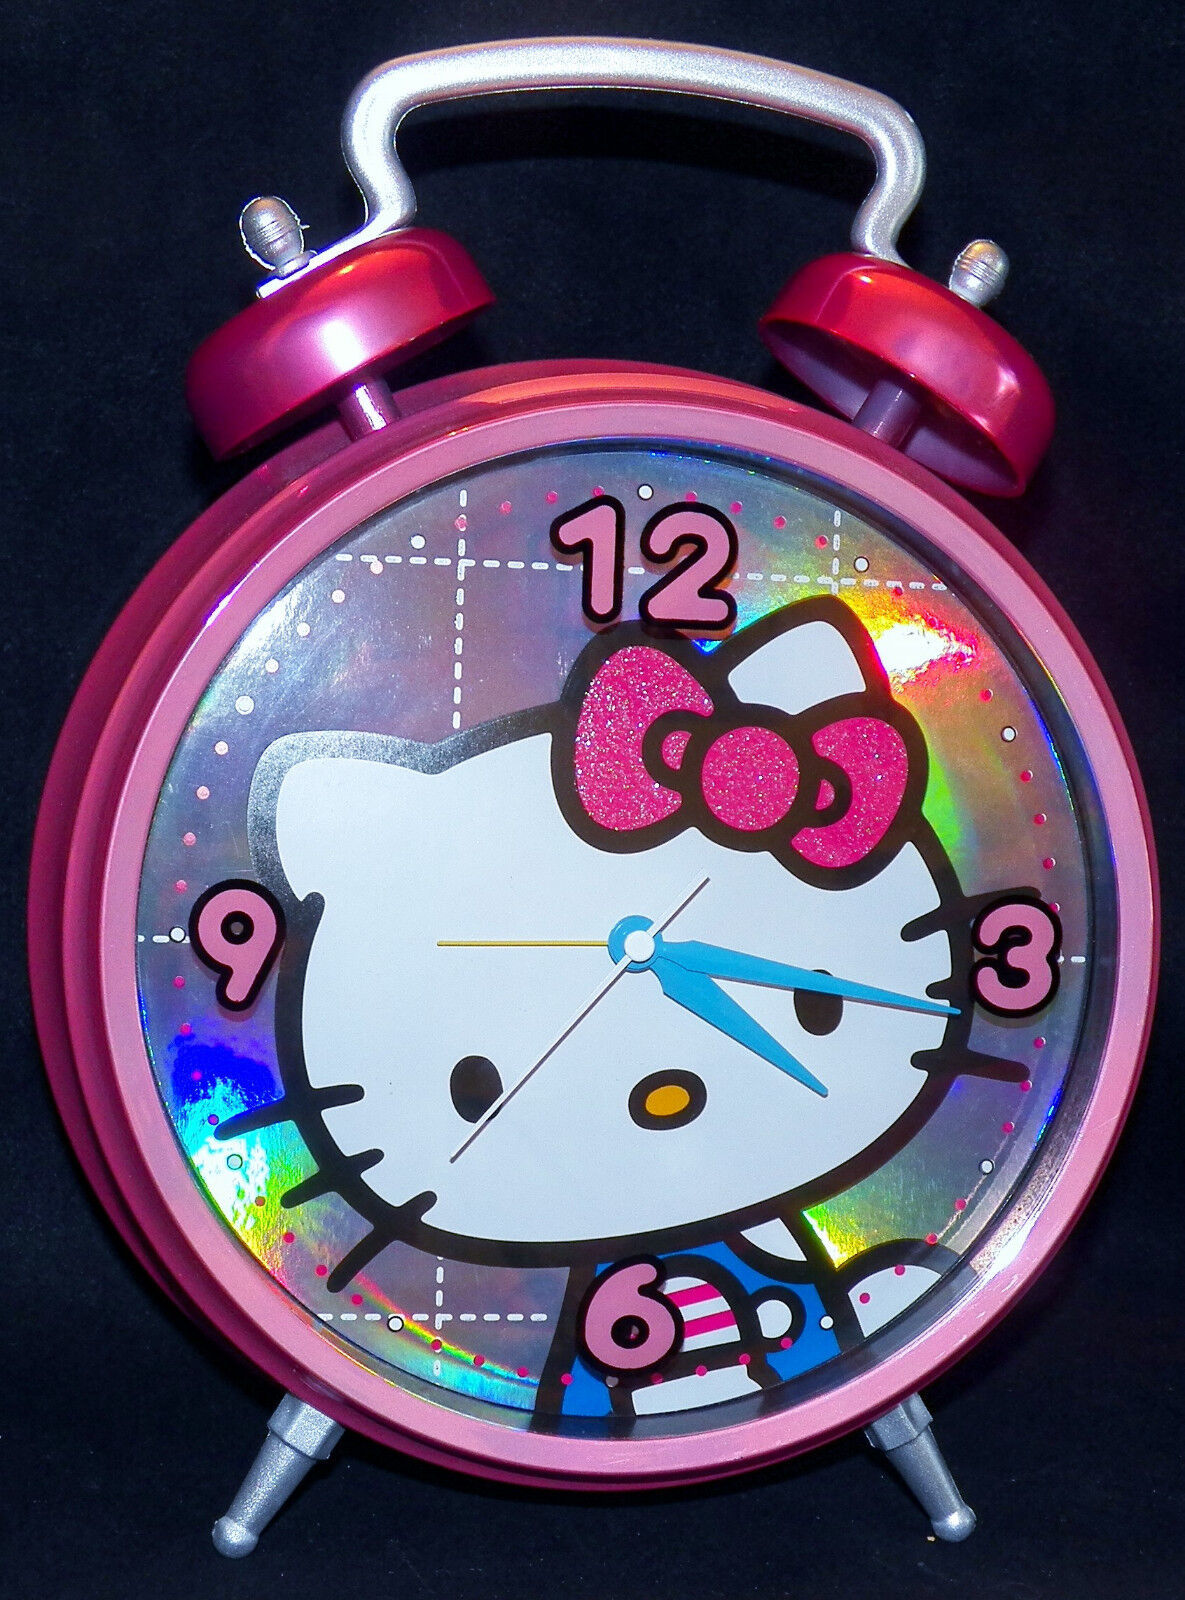 Hello Kitty Jumbo 10 inch Dia Metallic Pink Hologram Face Twin Bell Alarm Clock - $18.99